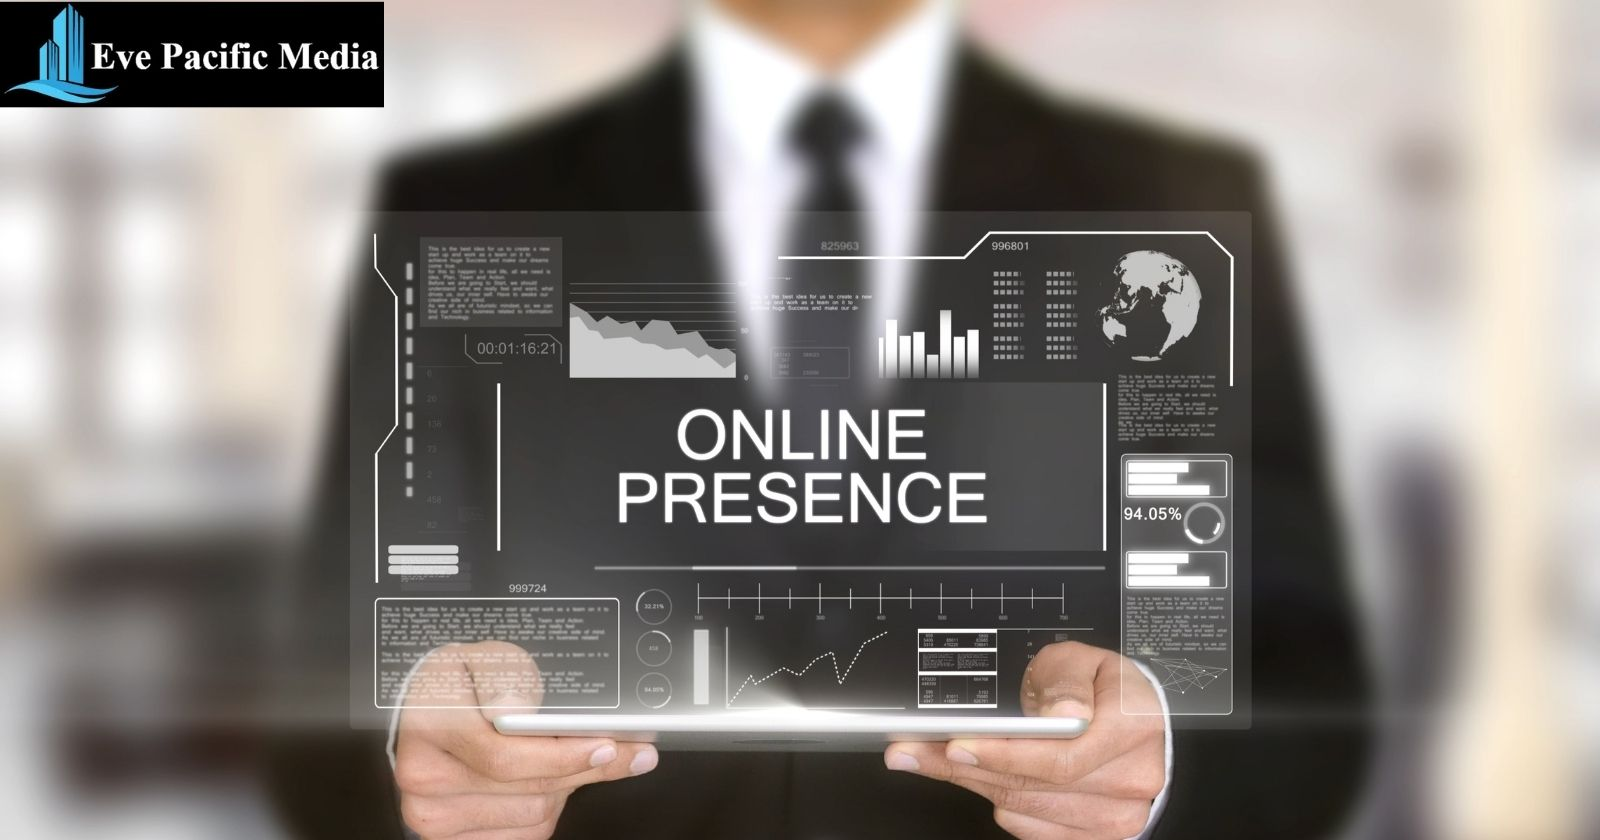 Online presence: Marketing Tax Services